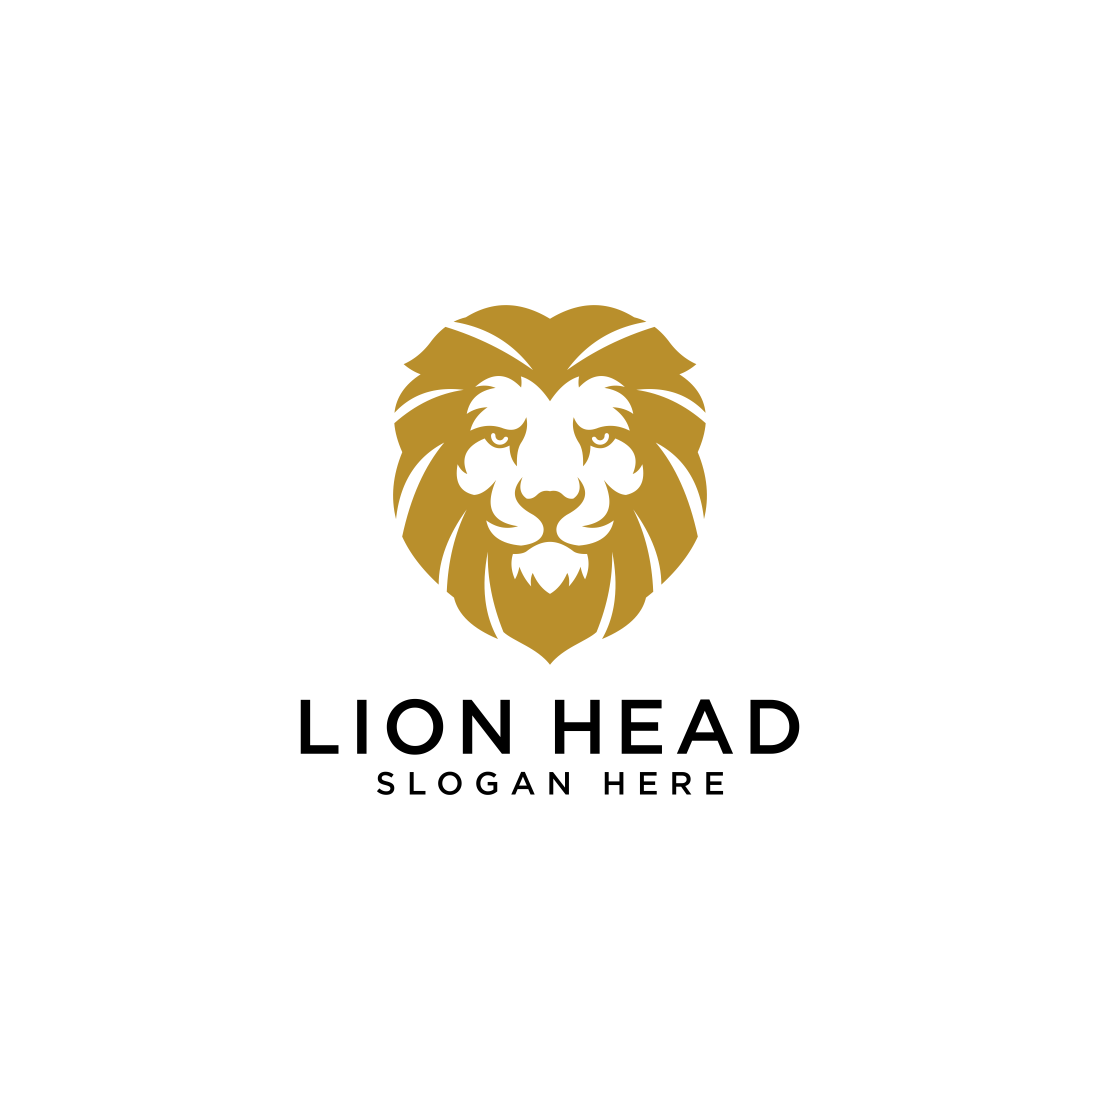 lion head logo vector animal cover image.